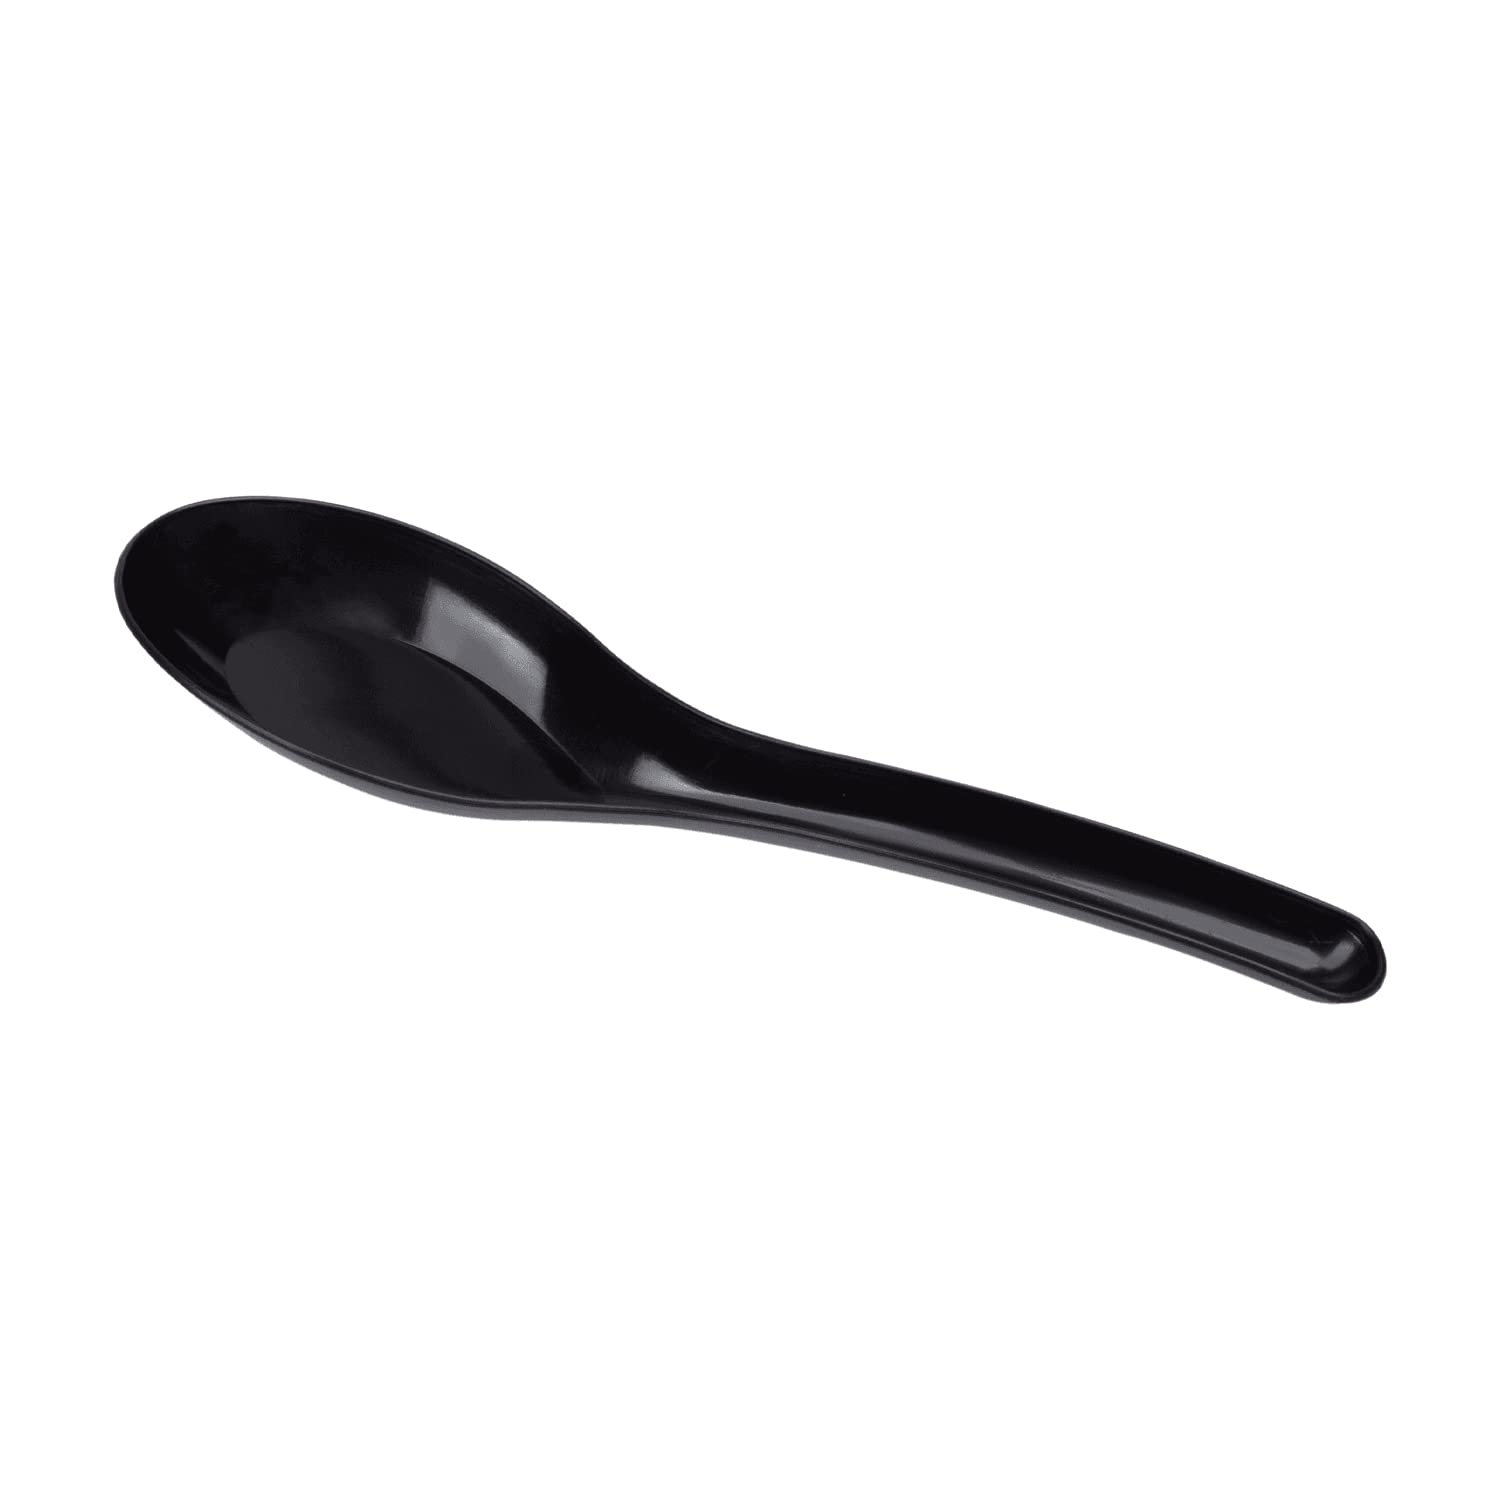 Karat U2015B Med-Heavy Weight Asian Soup Spoon - Black -1,000 ct